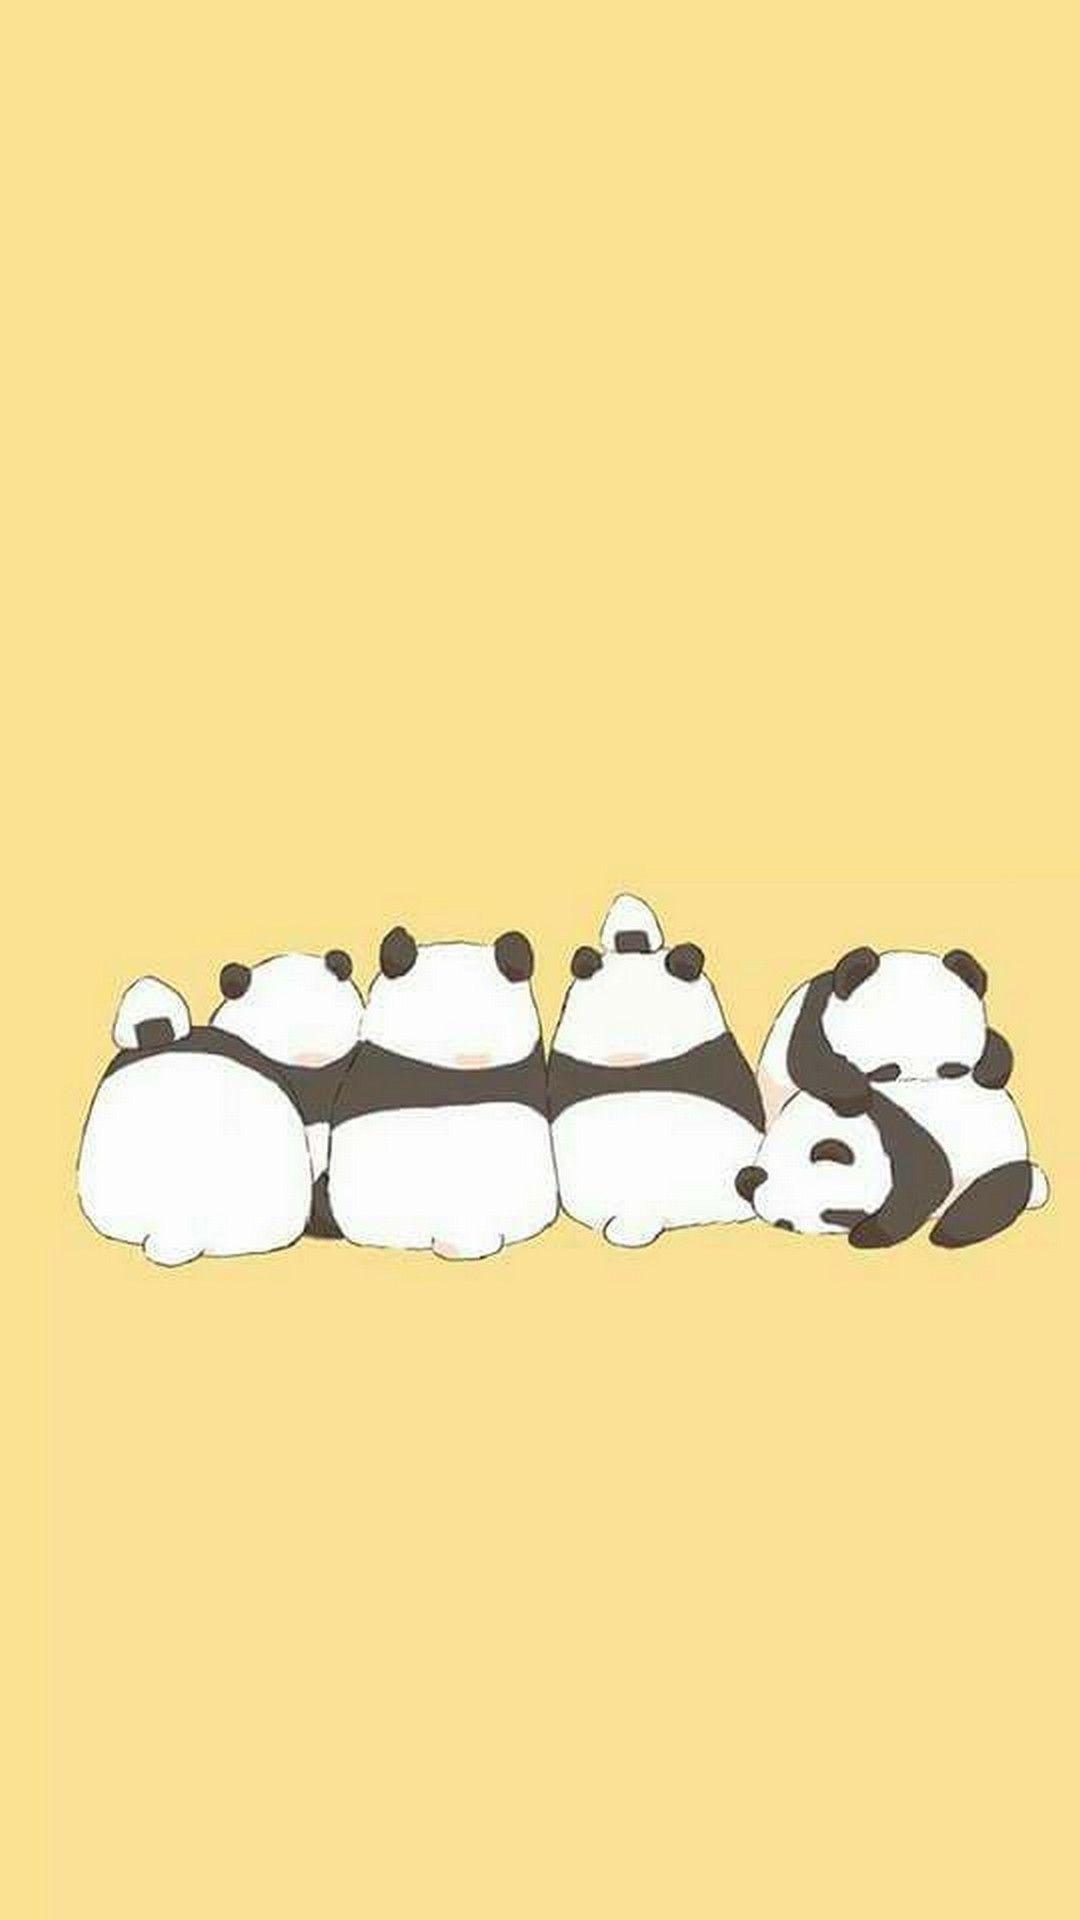 Panda HD Wallpaper For Mobile. Best HD Wallpaper. Cute panda wallpaper, Panda wallpaper, Wallpaper iphone cute